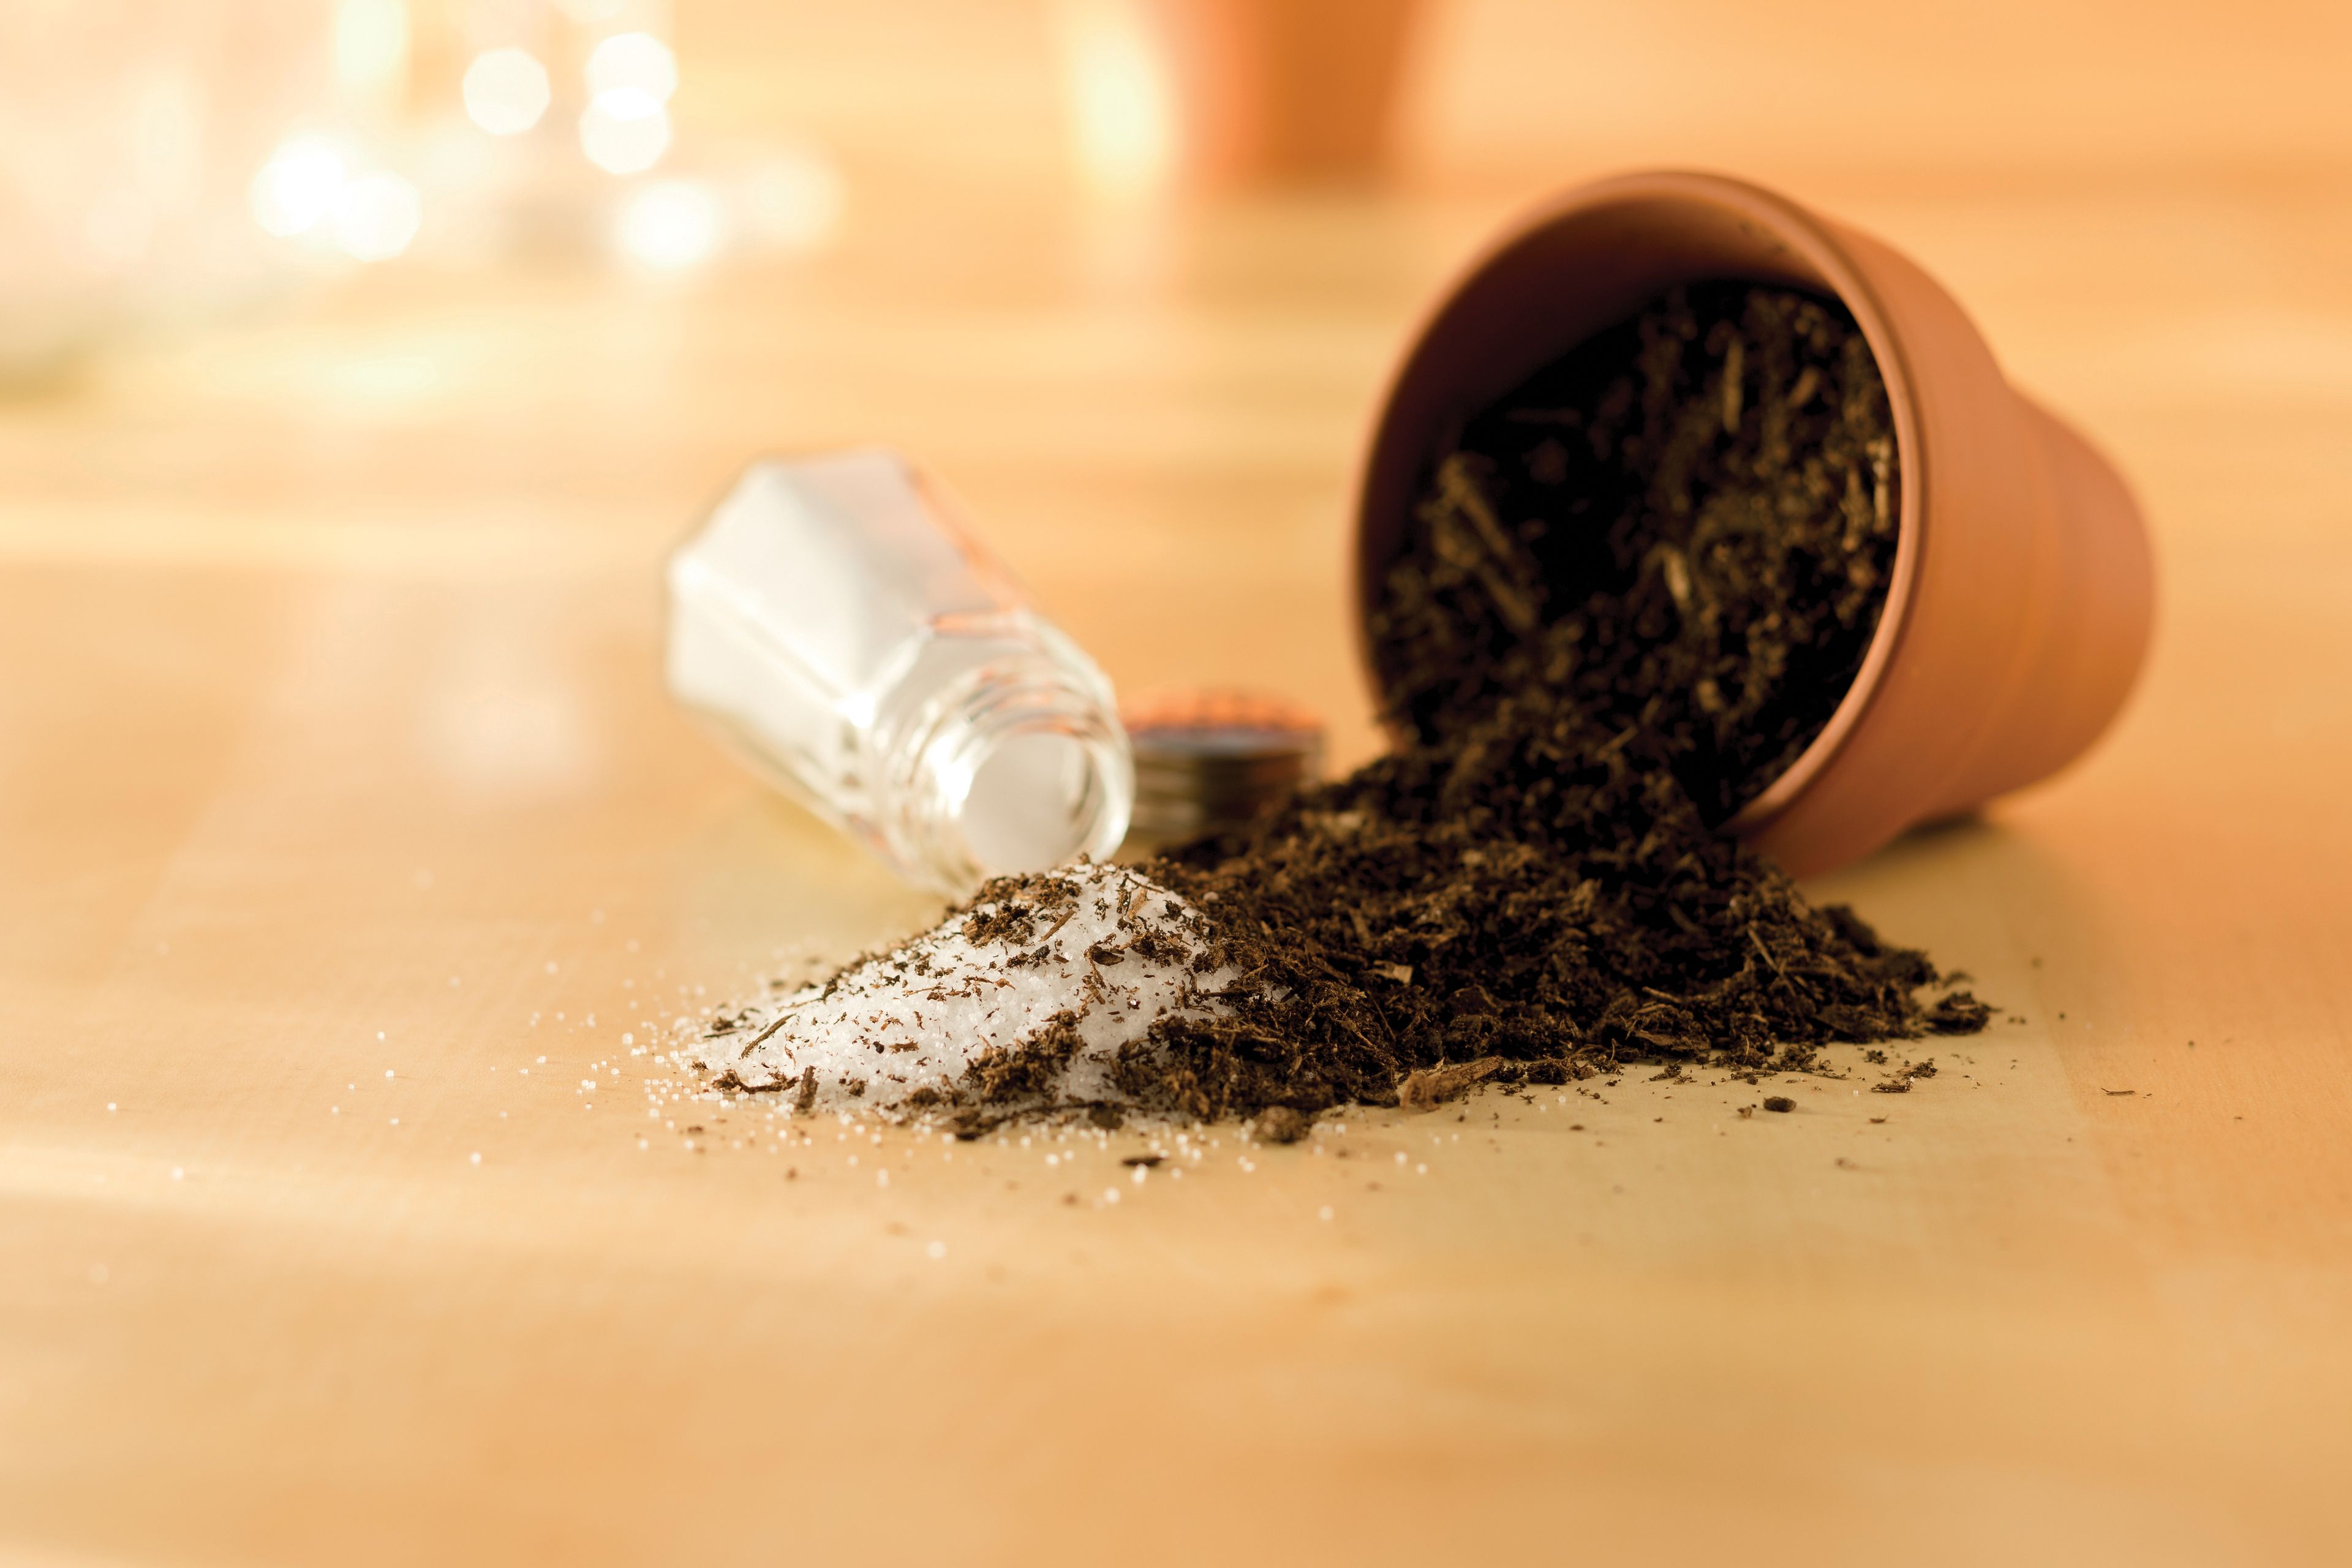 A conceptual photograph of salt mixing with dirt.